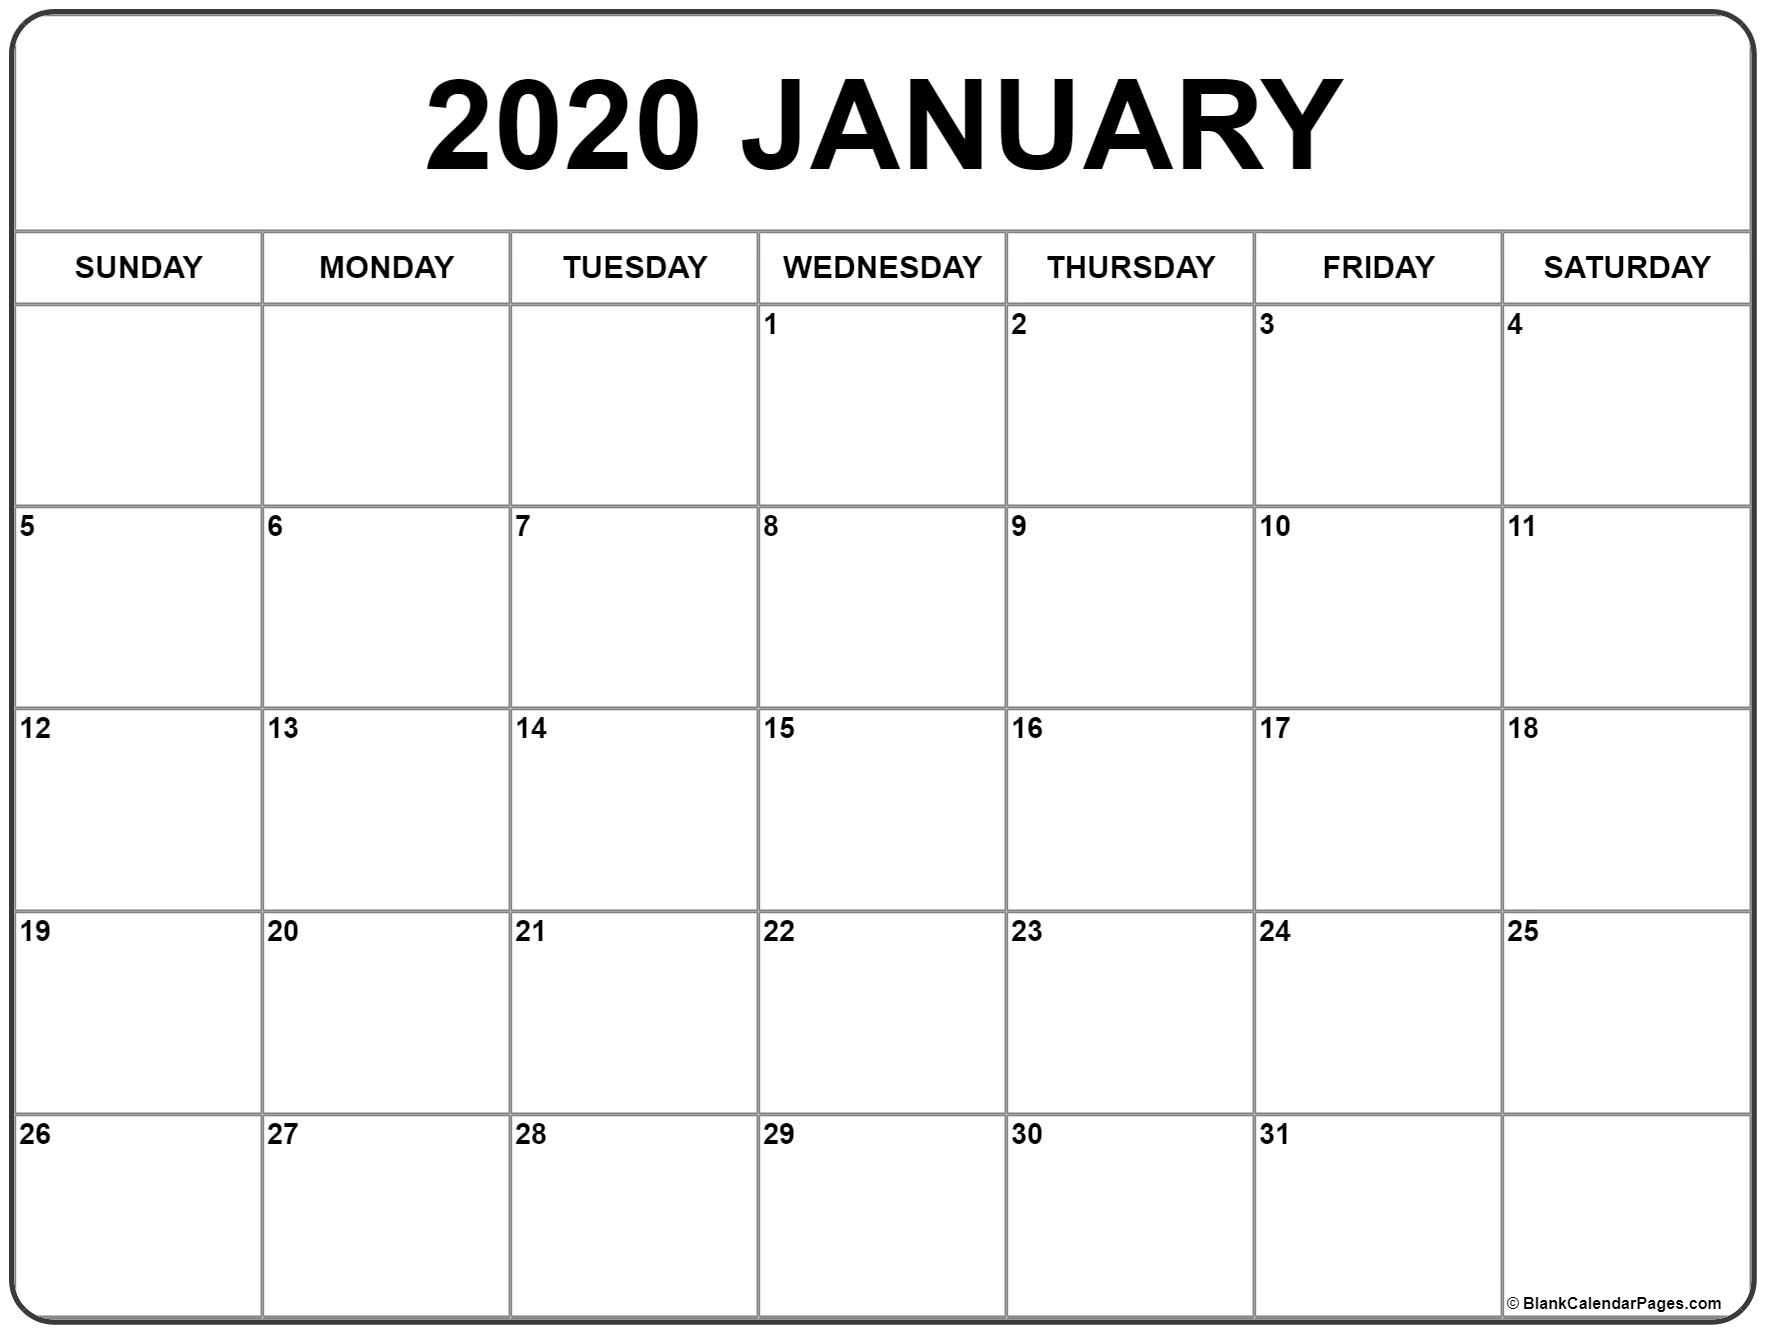 January 2020 Calendar | Free Printable Monthly Calendars-January 2020 Calendar Image